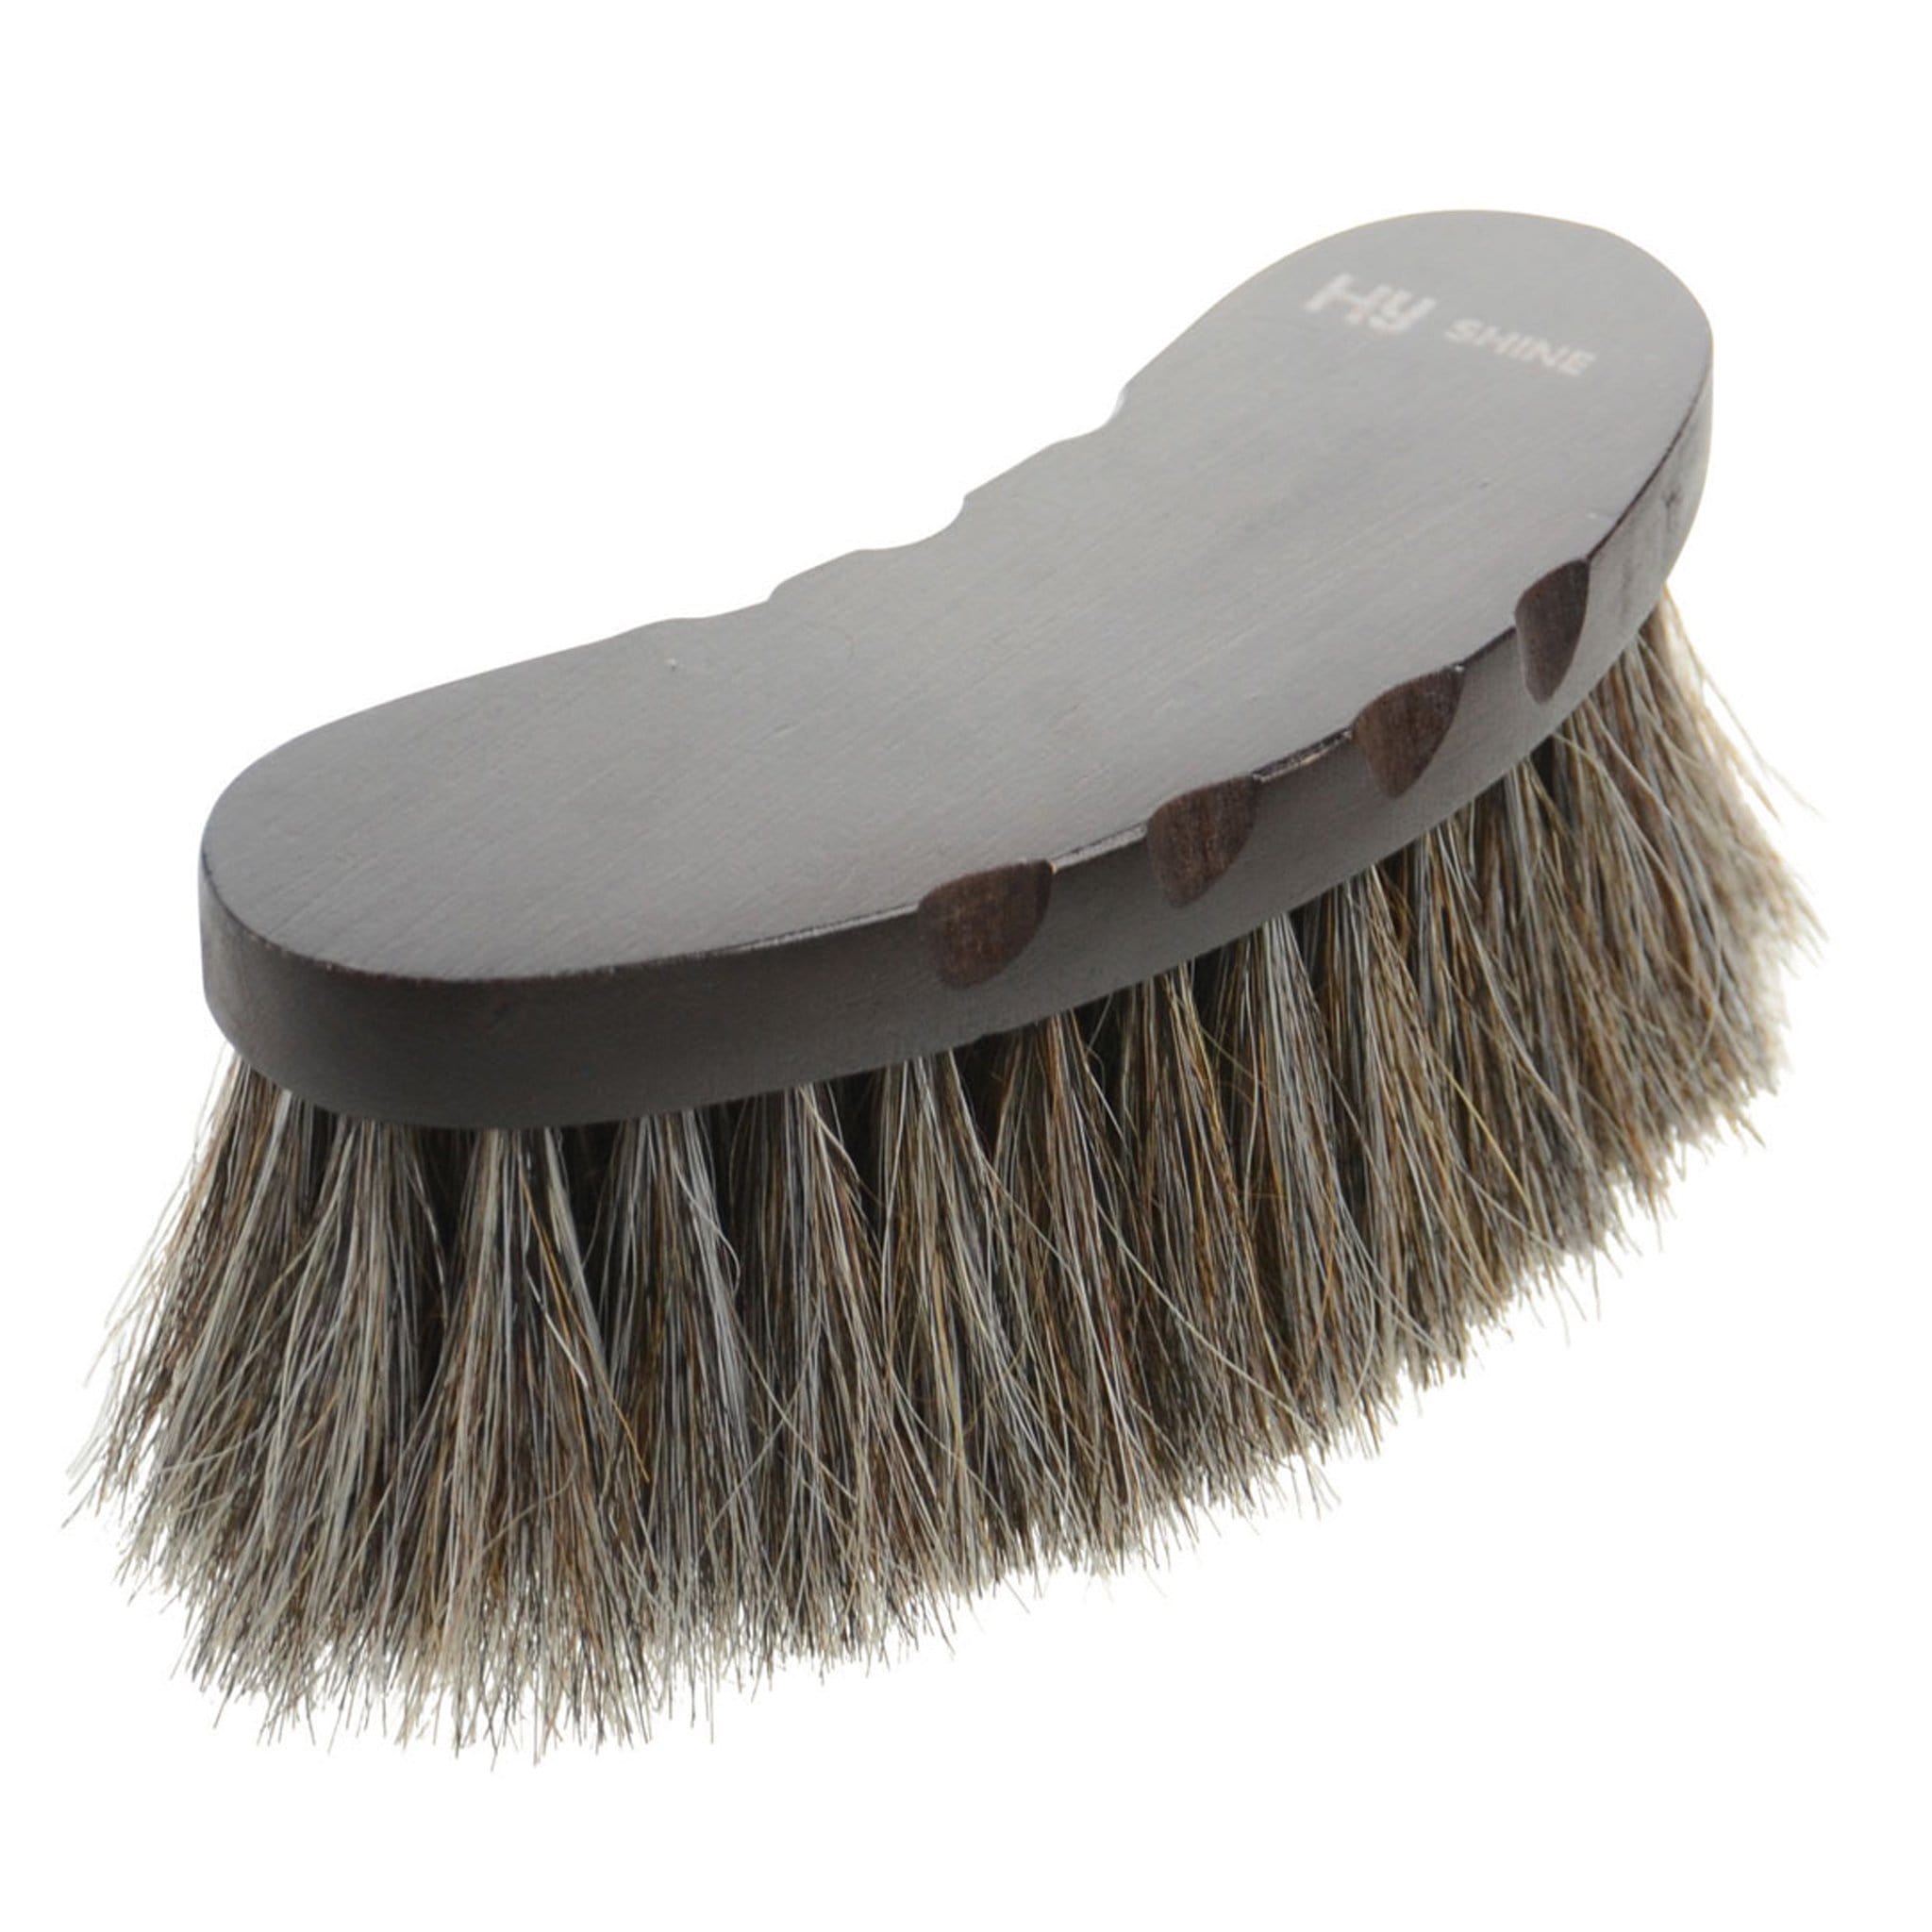 HySHINE Deluxe Half Round Brush with Horse Hair 10489